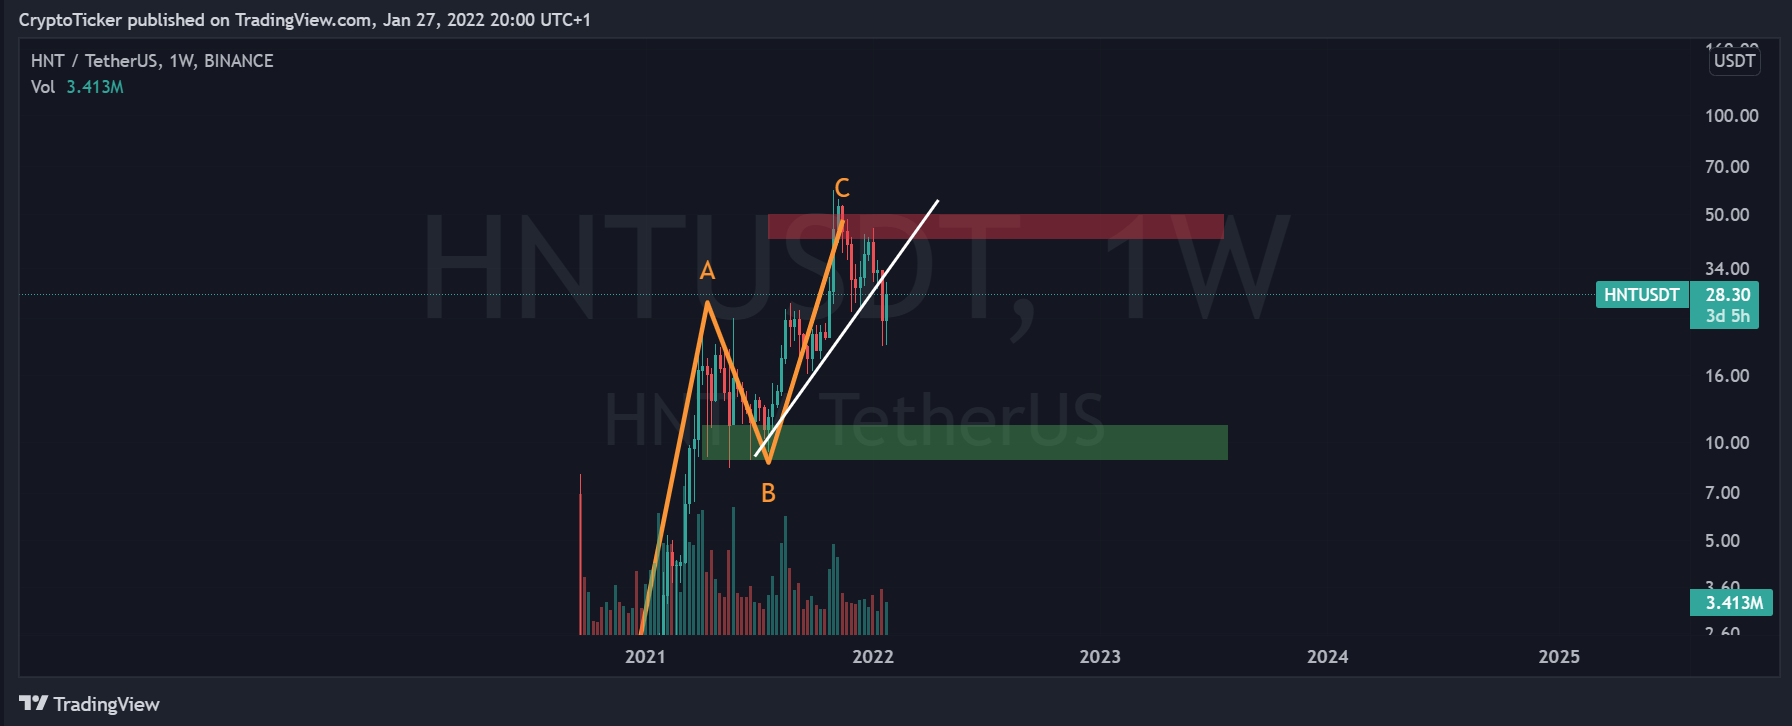 Helium price - HNT/USDT 1-week chart showing the uptrend break